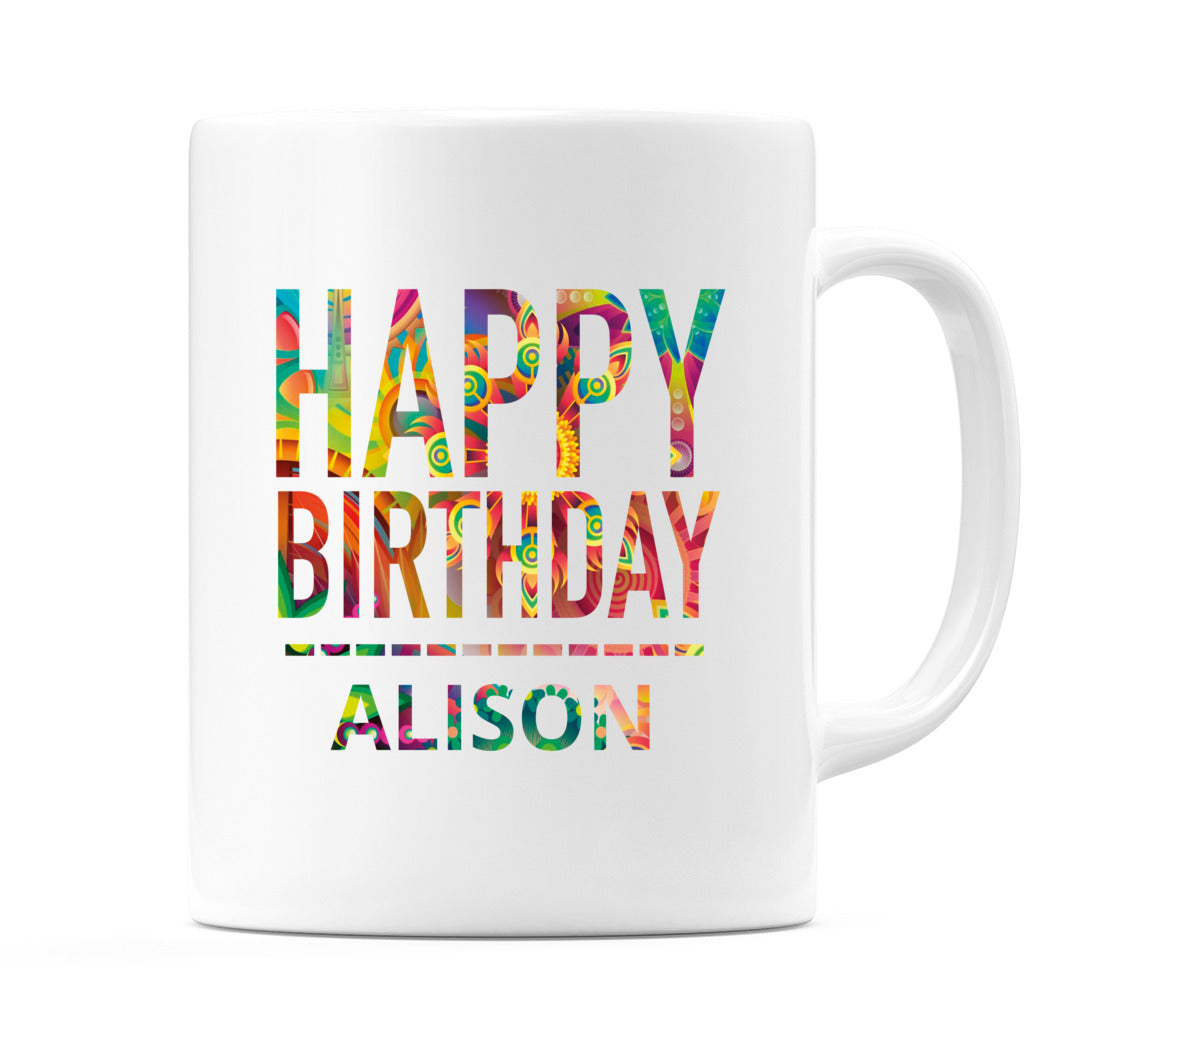 Happy Birthday Alison (Tie Dye Effect) Mug Cup by WeDoMugs